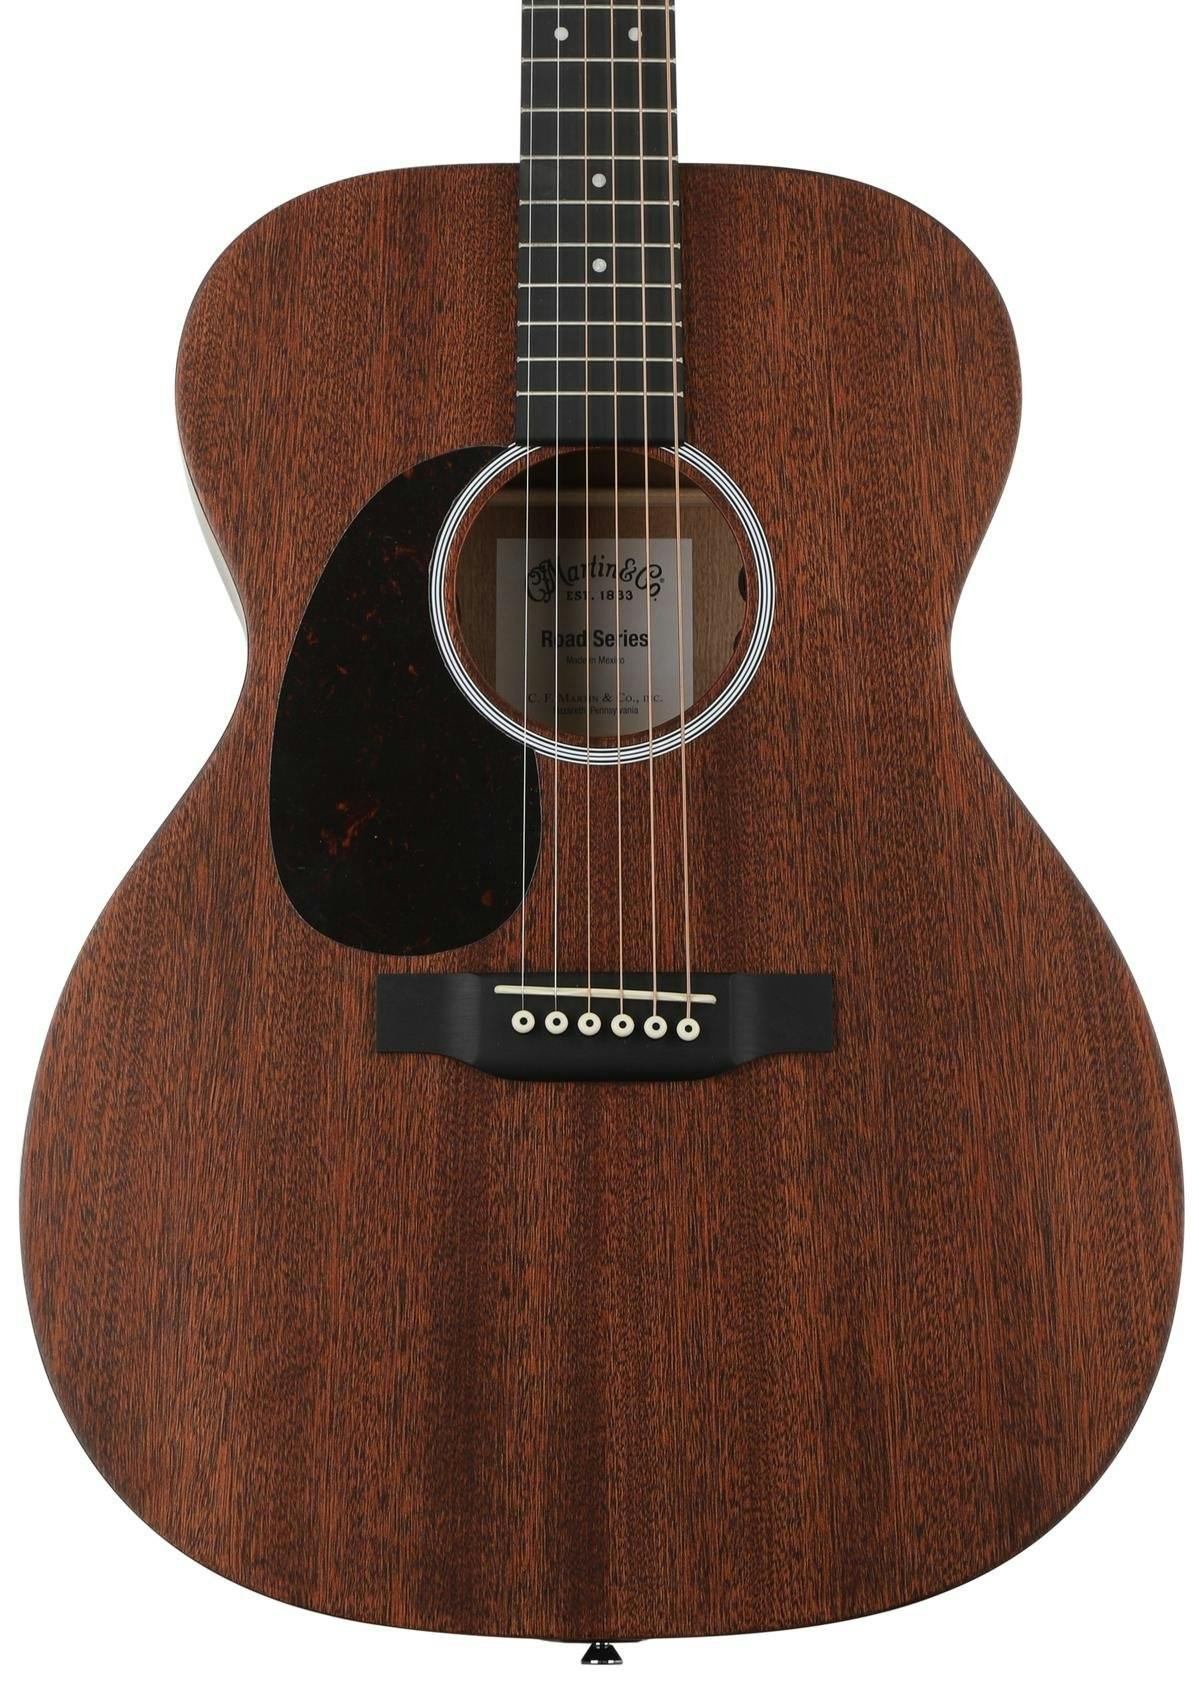 Maison LJ-22 VS アコースティックギター アコギ 器材 